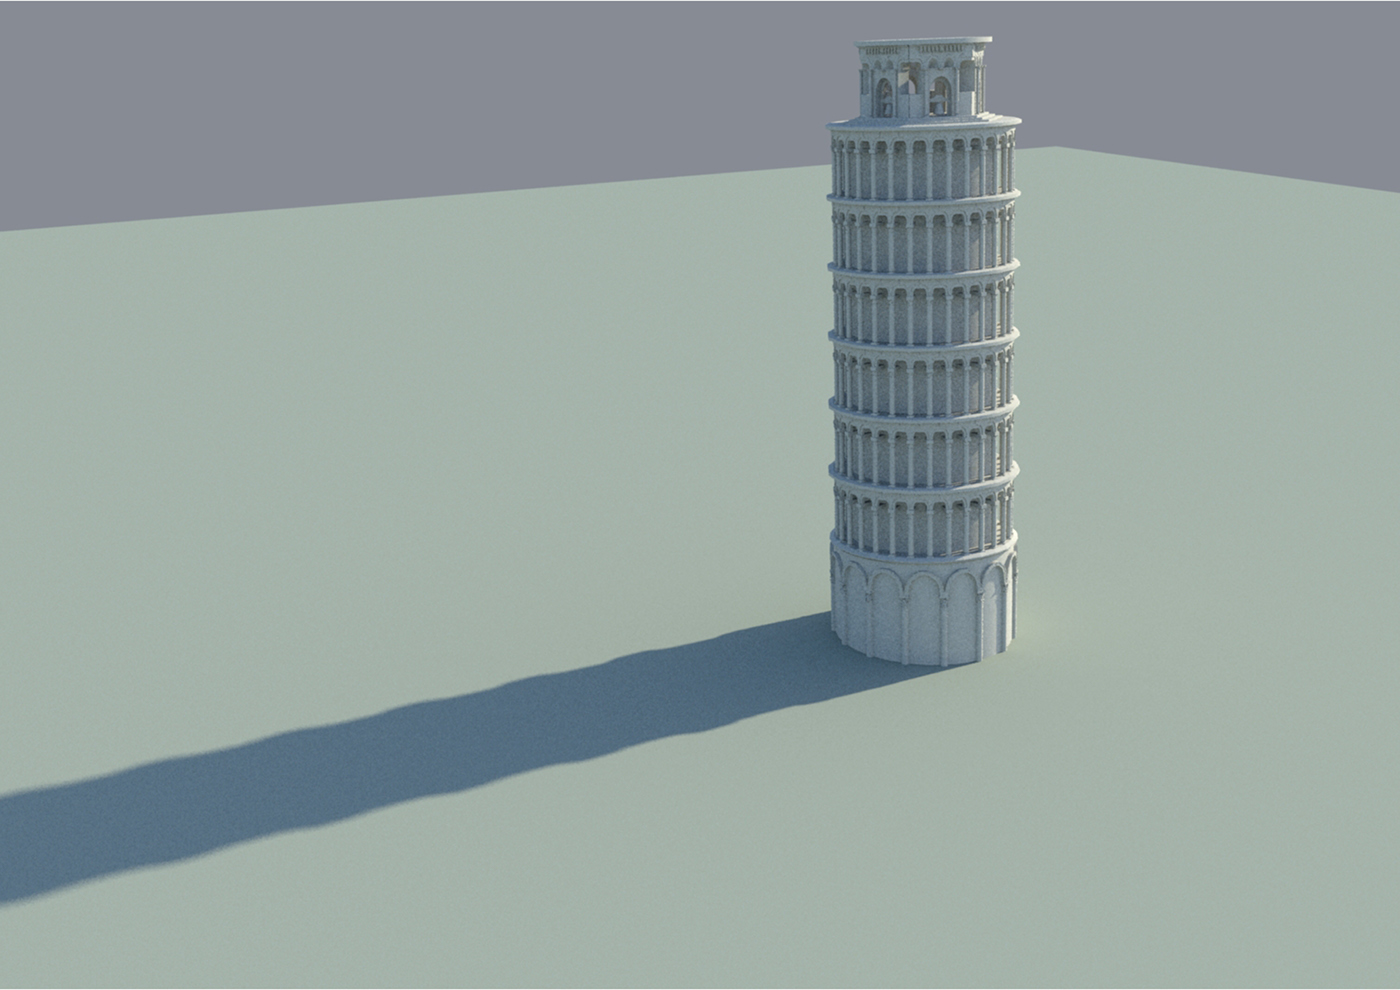 Maya autodesk maya Leaning Tower of Pisa leaning tower 3D model mental ray